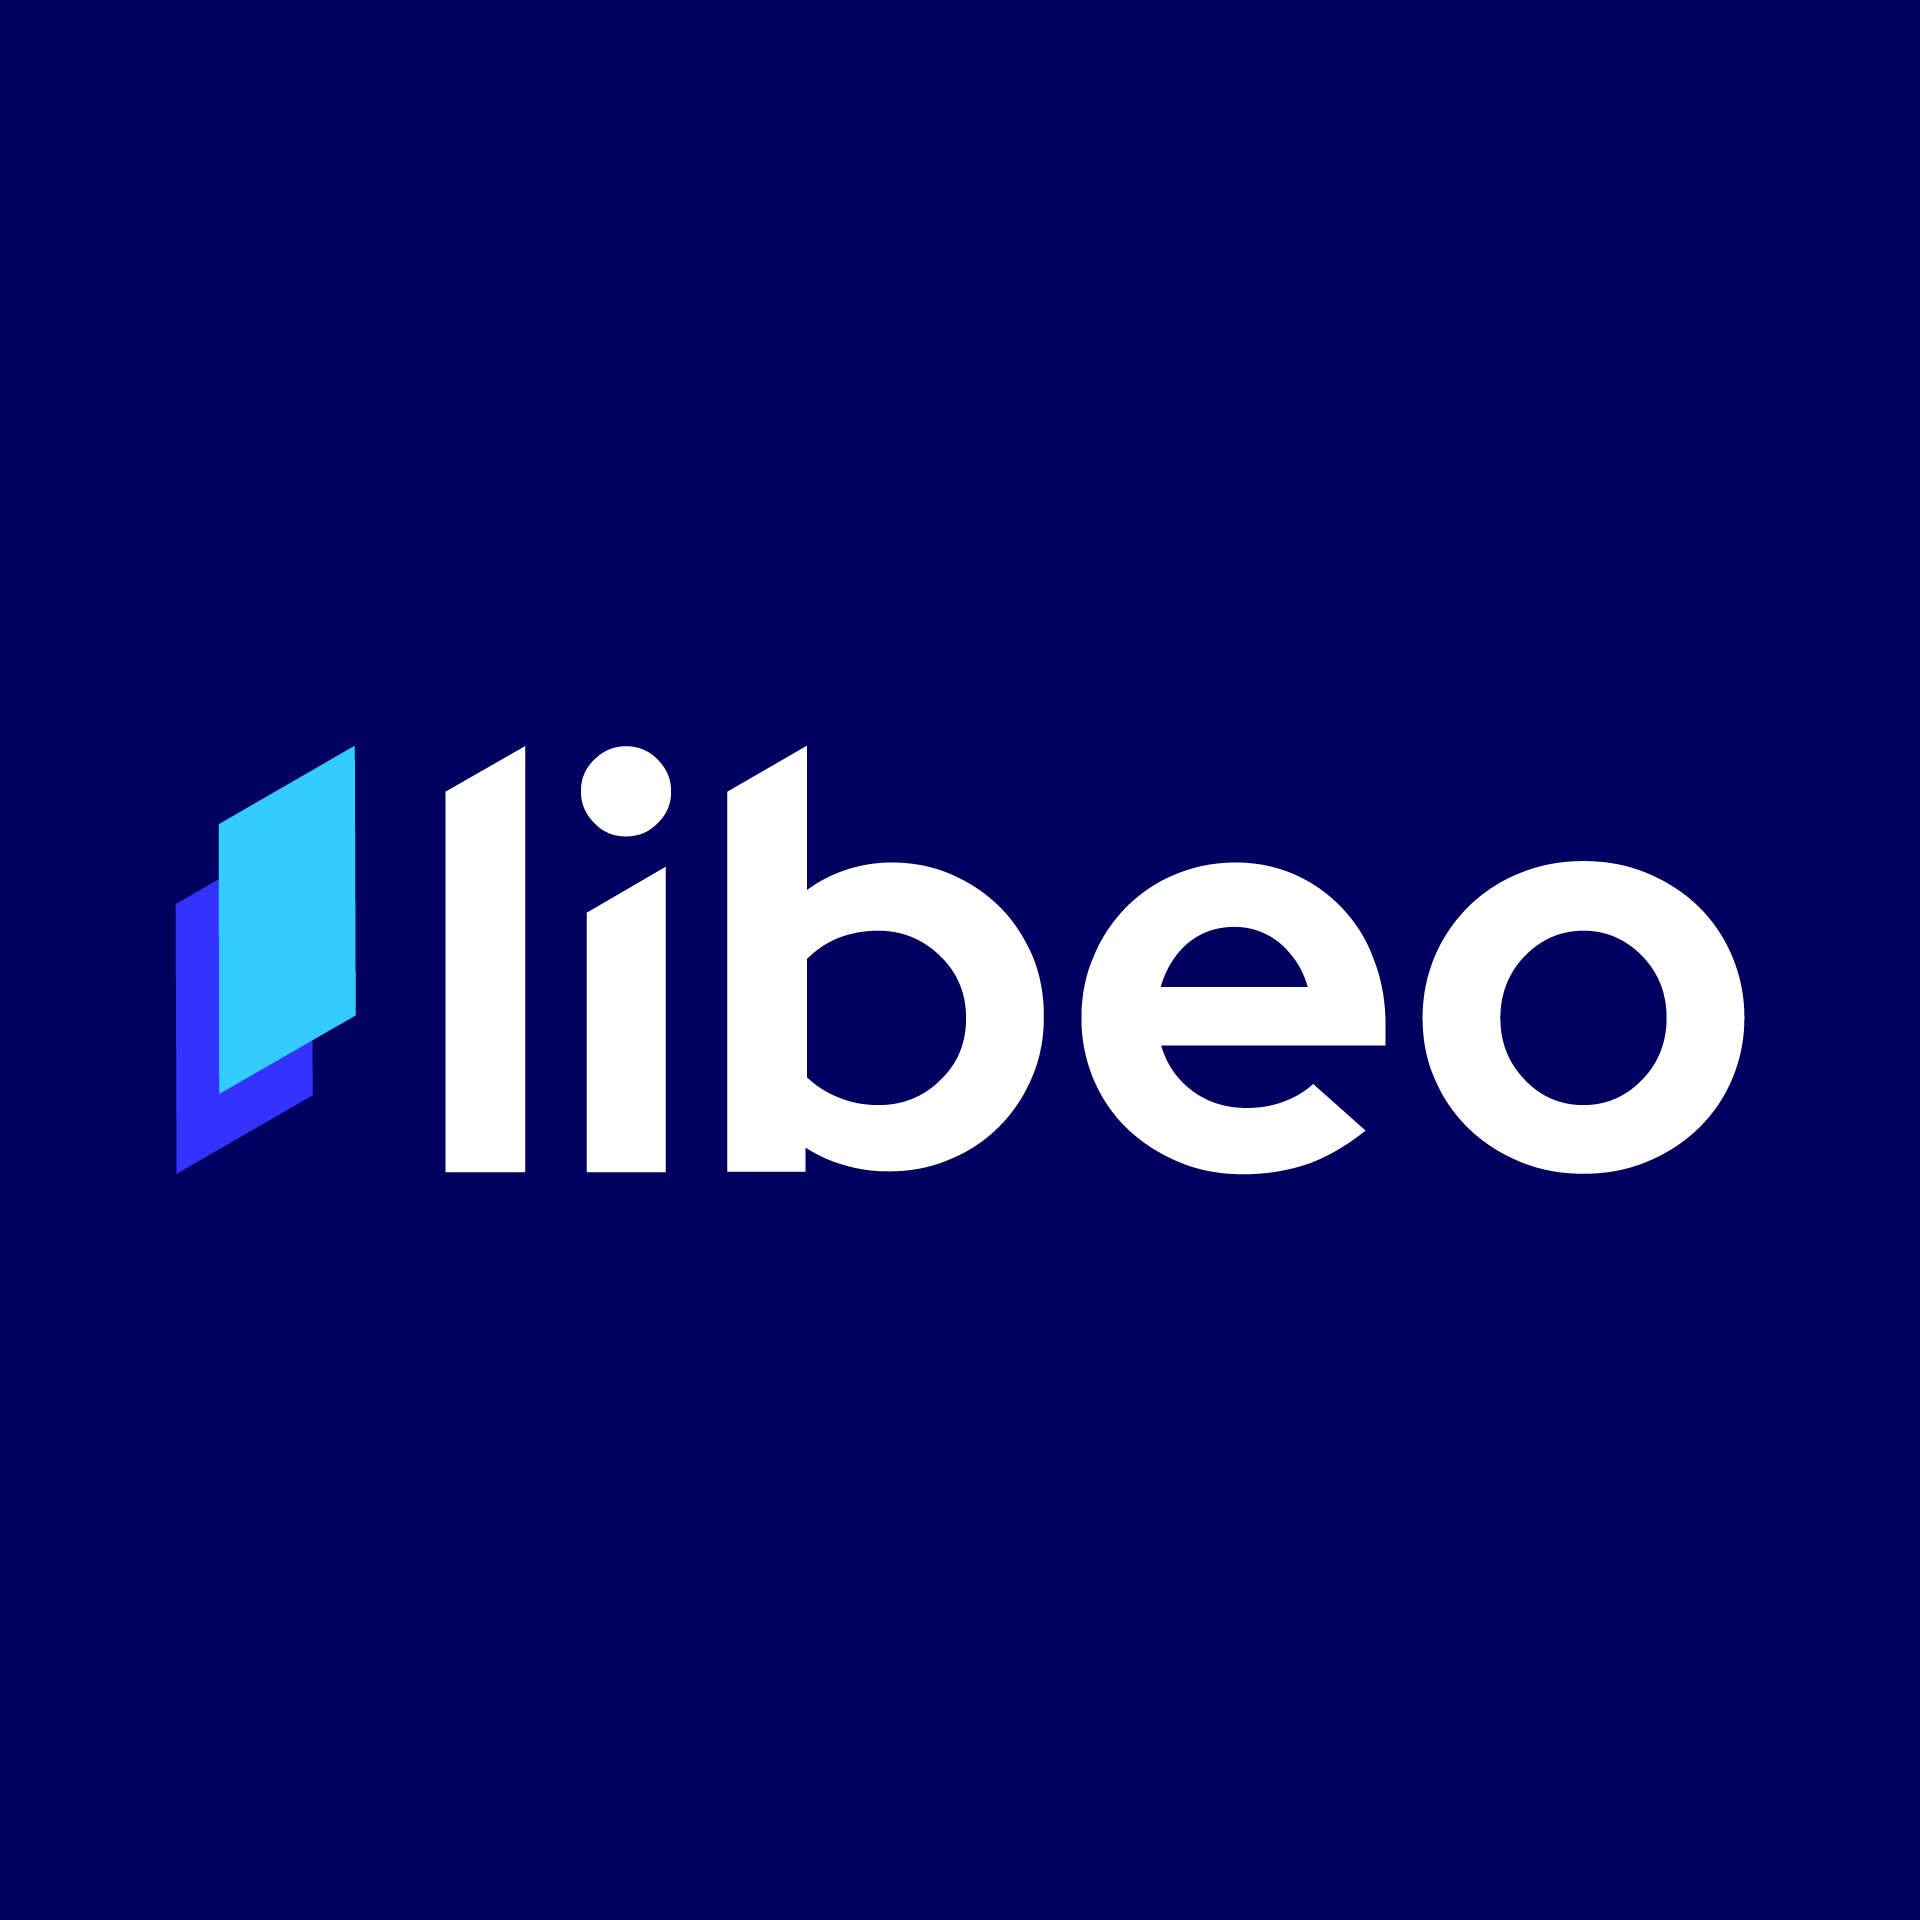 Libeo’s logo